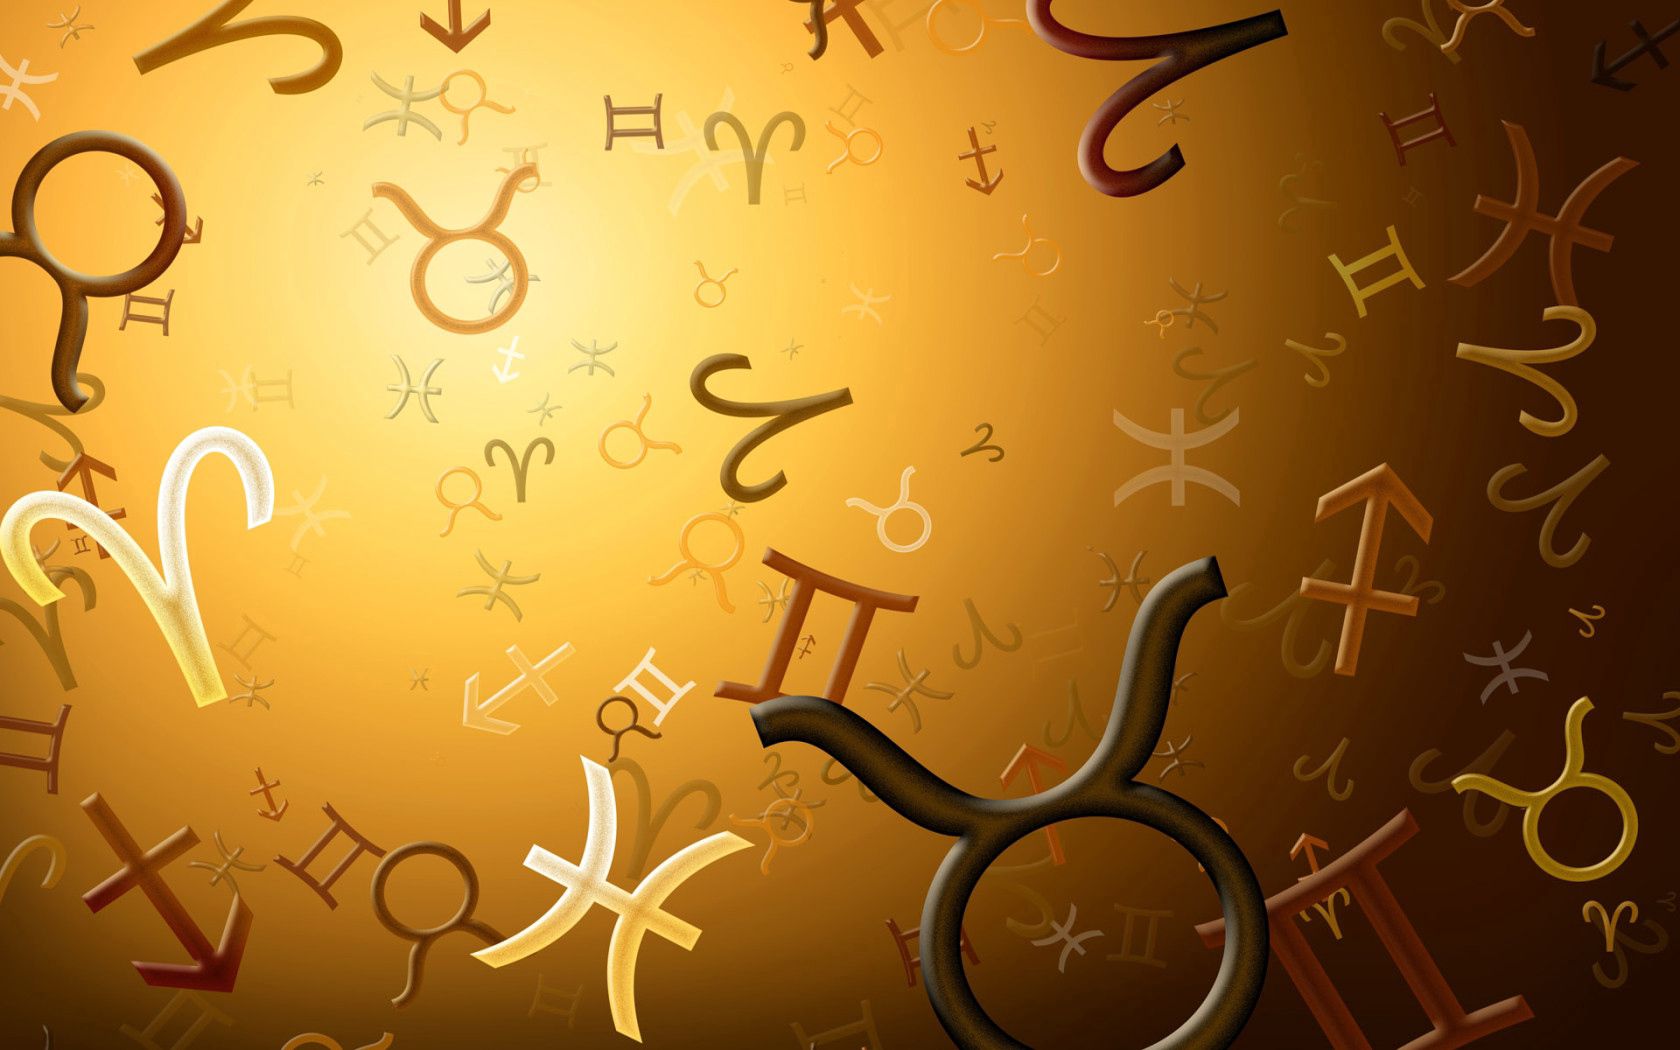 zodiac, symbols, characters, miscellanea, miscellaneous, zodiac signs, signs of the zodiac